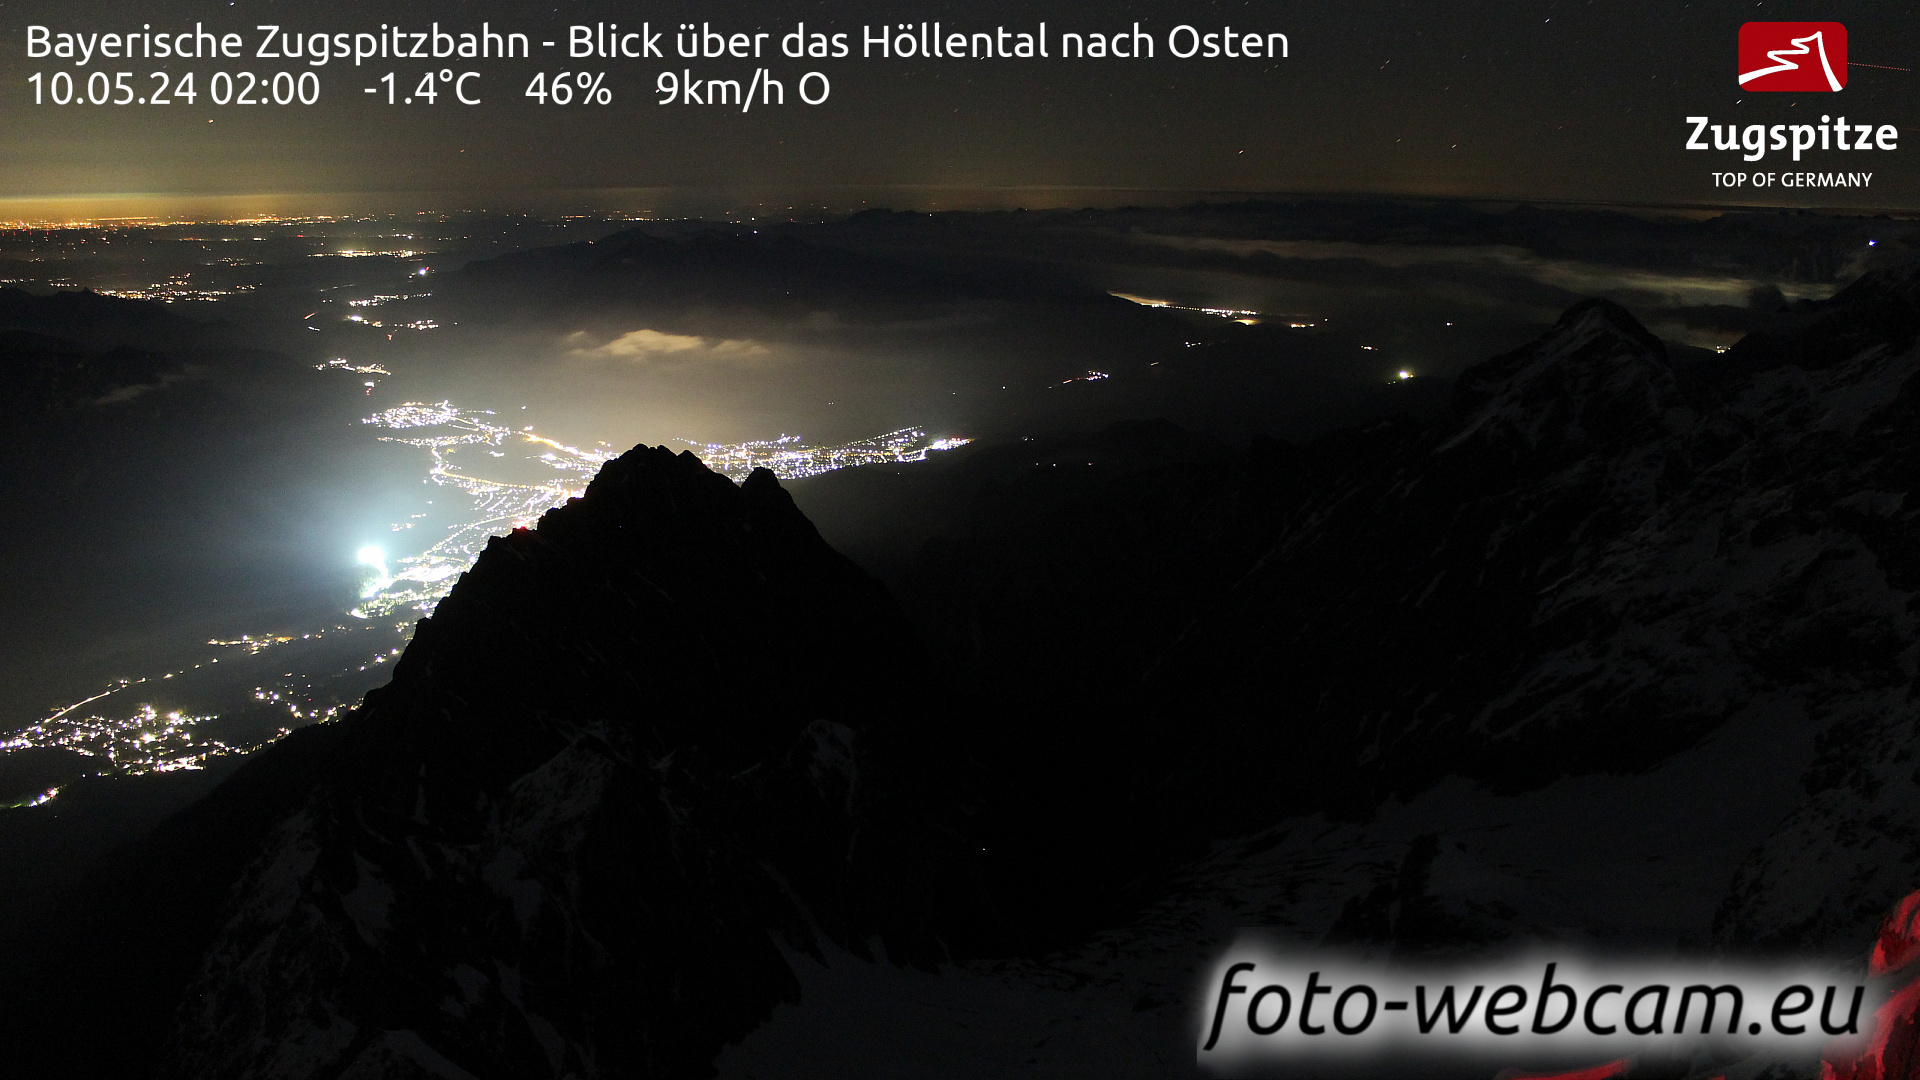 Zugspitze Fr. 02:05